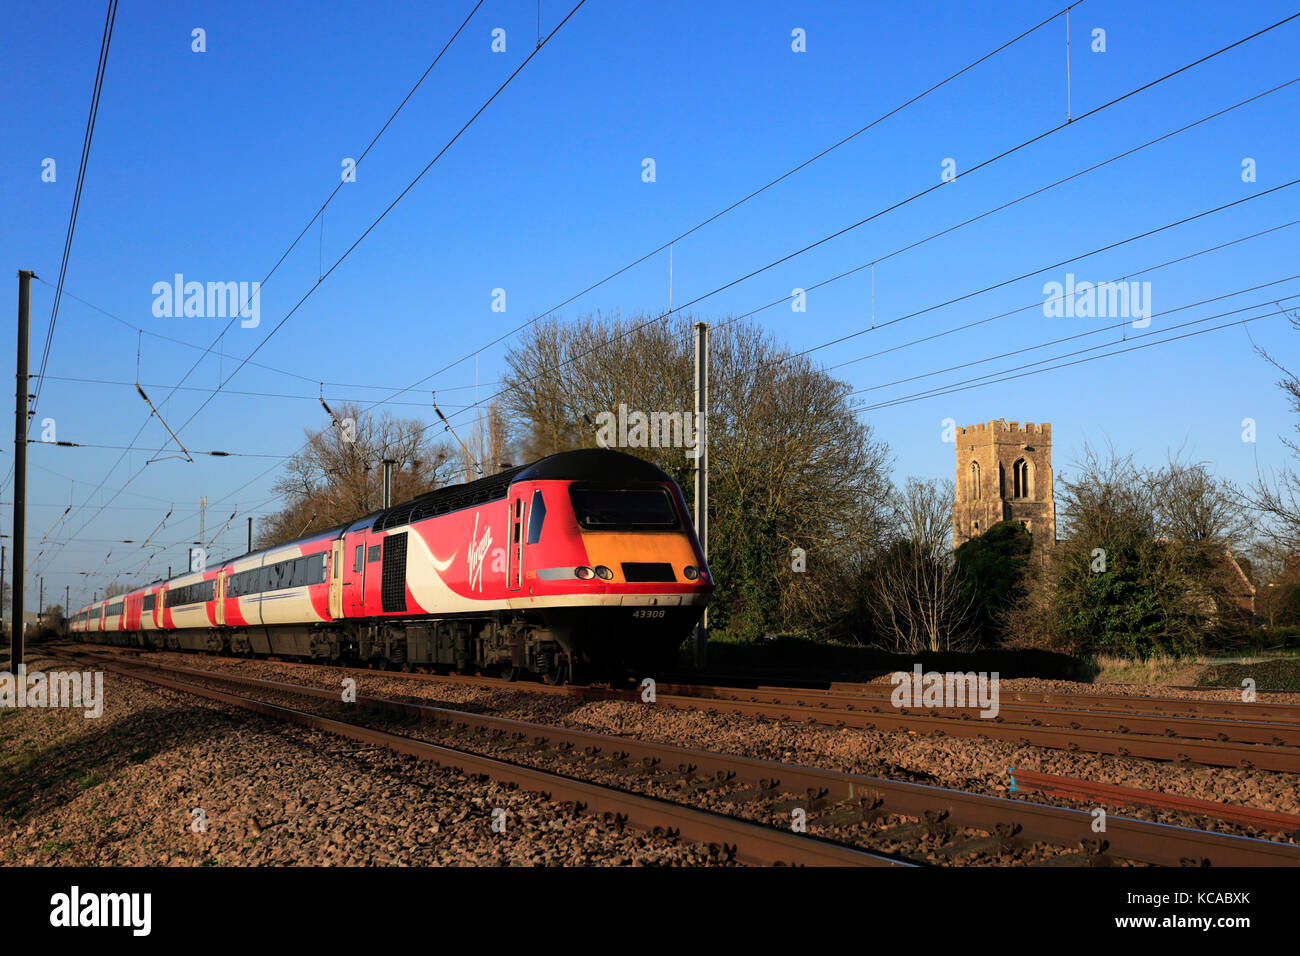 43308, Virgin Trains, Offord Cluny village, East Coast Main Line Railway, Peterborough, Cambridgeshire, England, UK Stock Photo